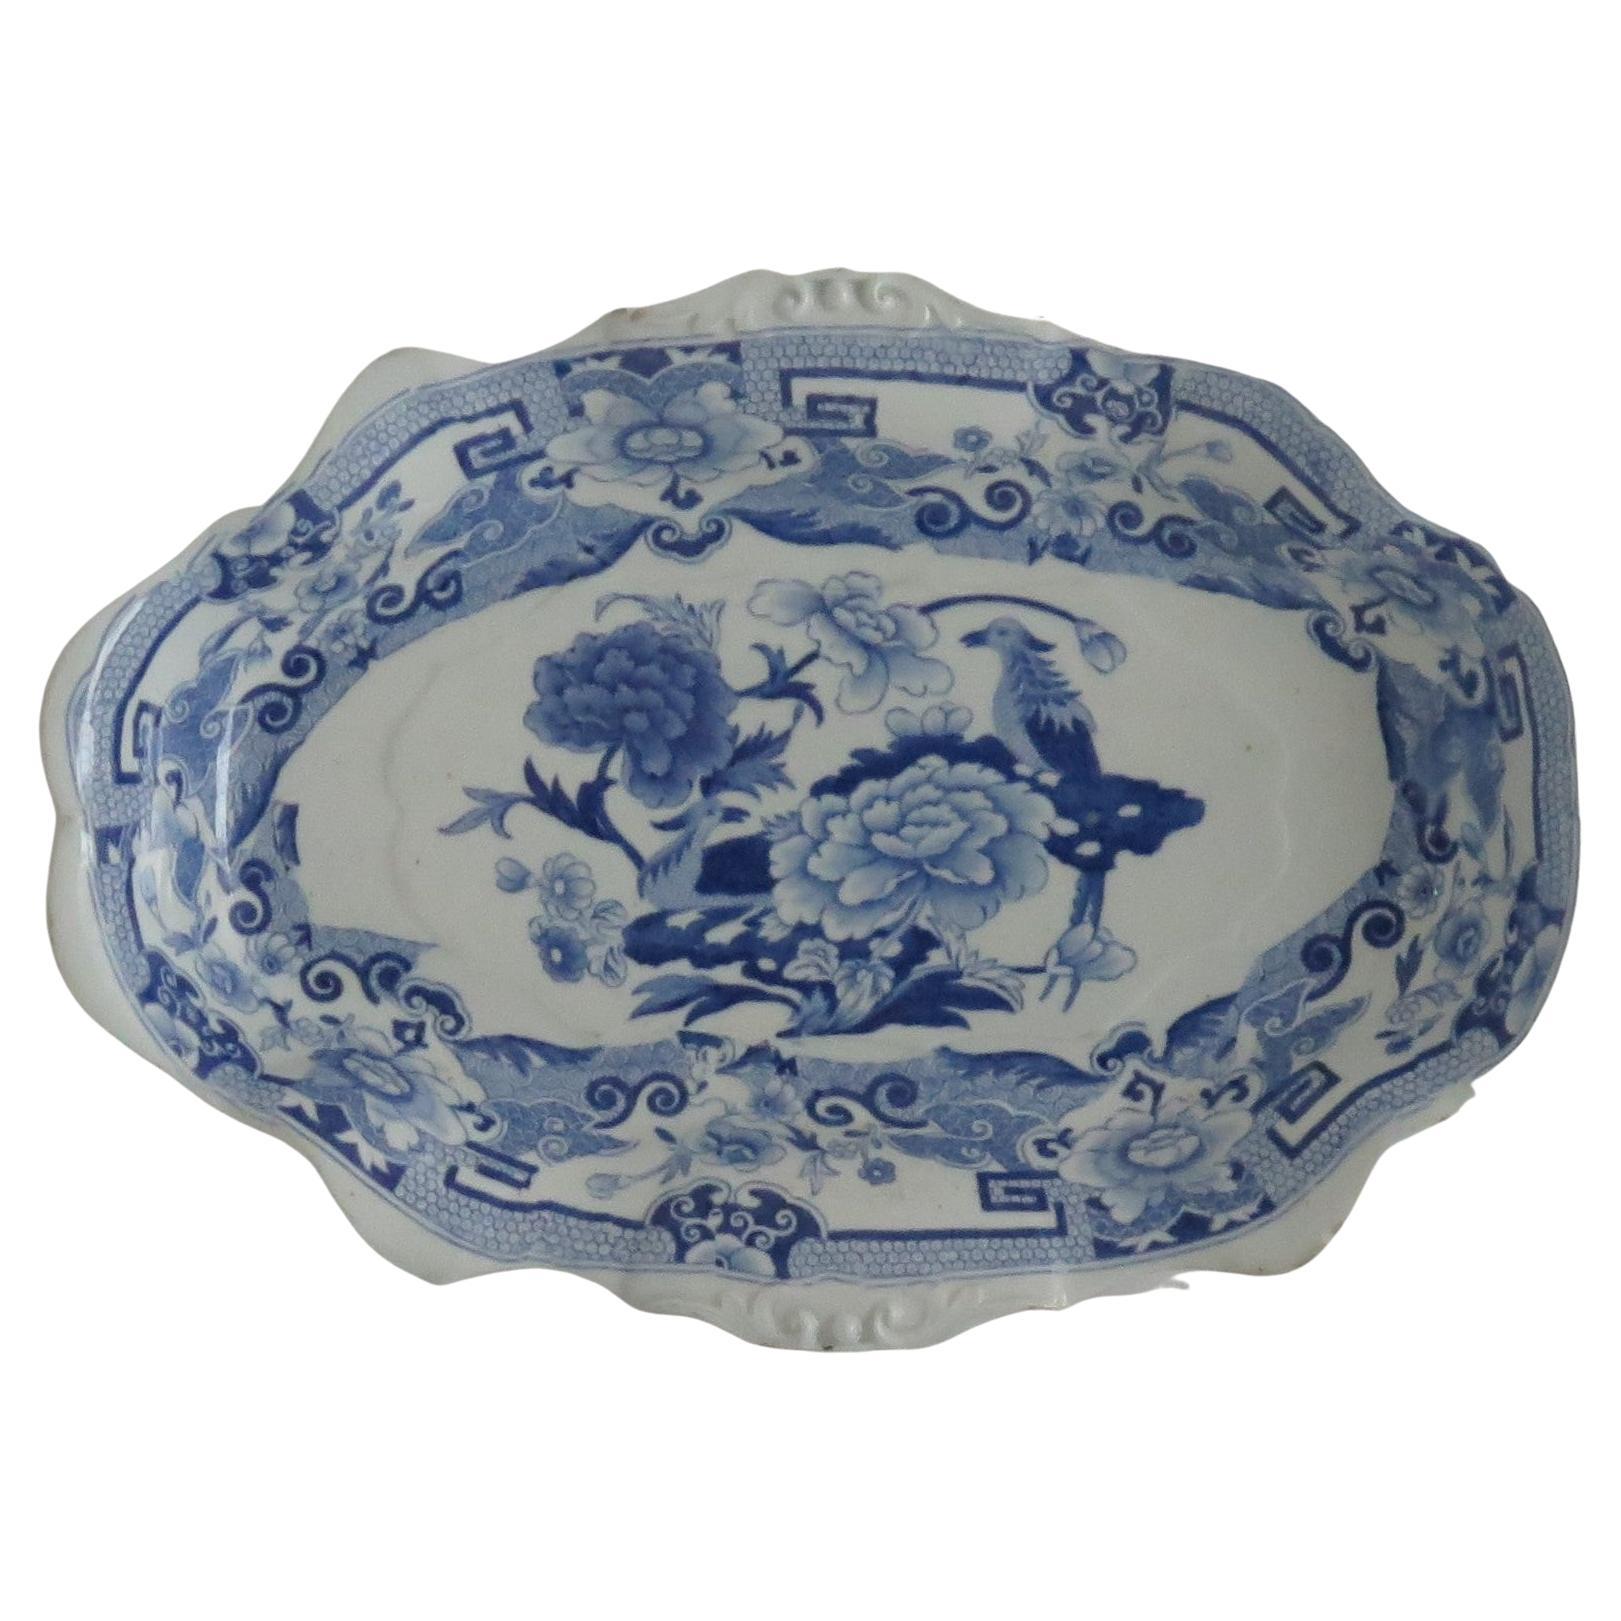 Mason's Ironstone Serving Dish Blue and White India Pheasants Pattern,circa 1820